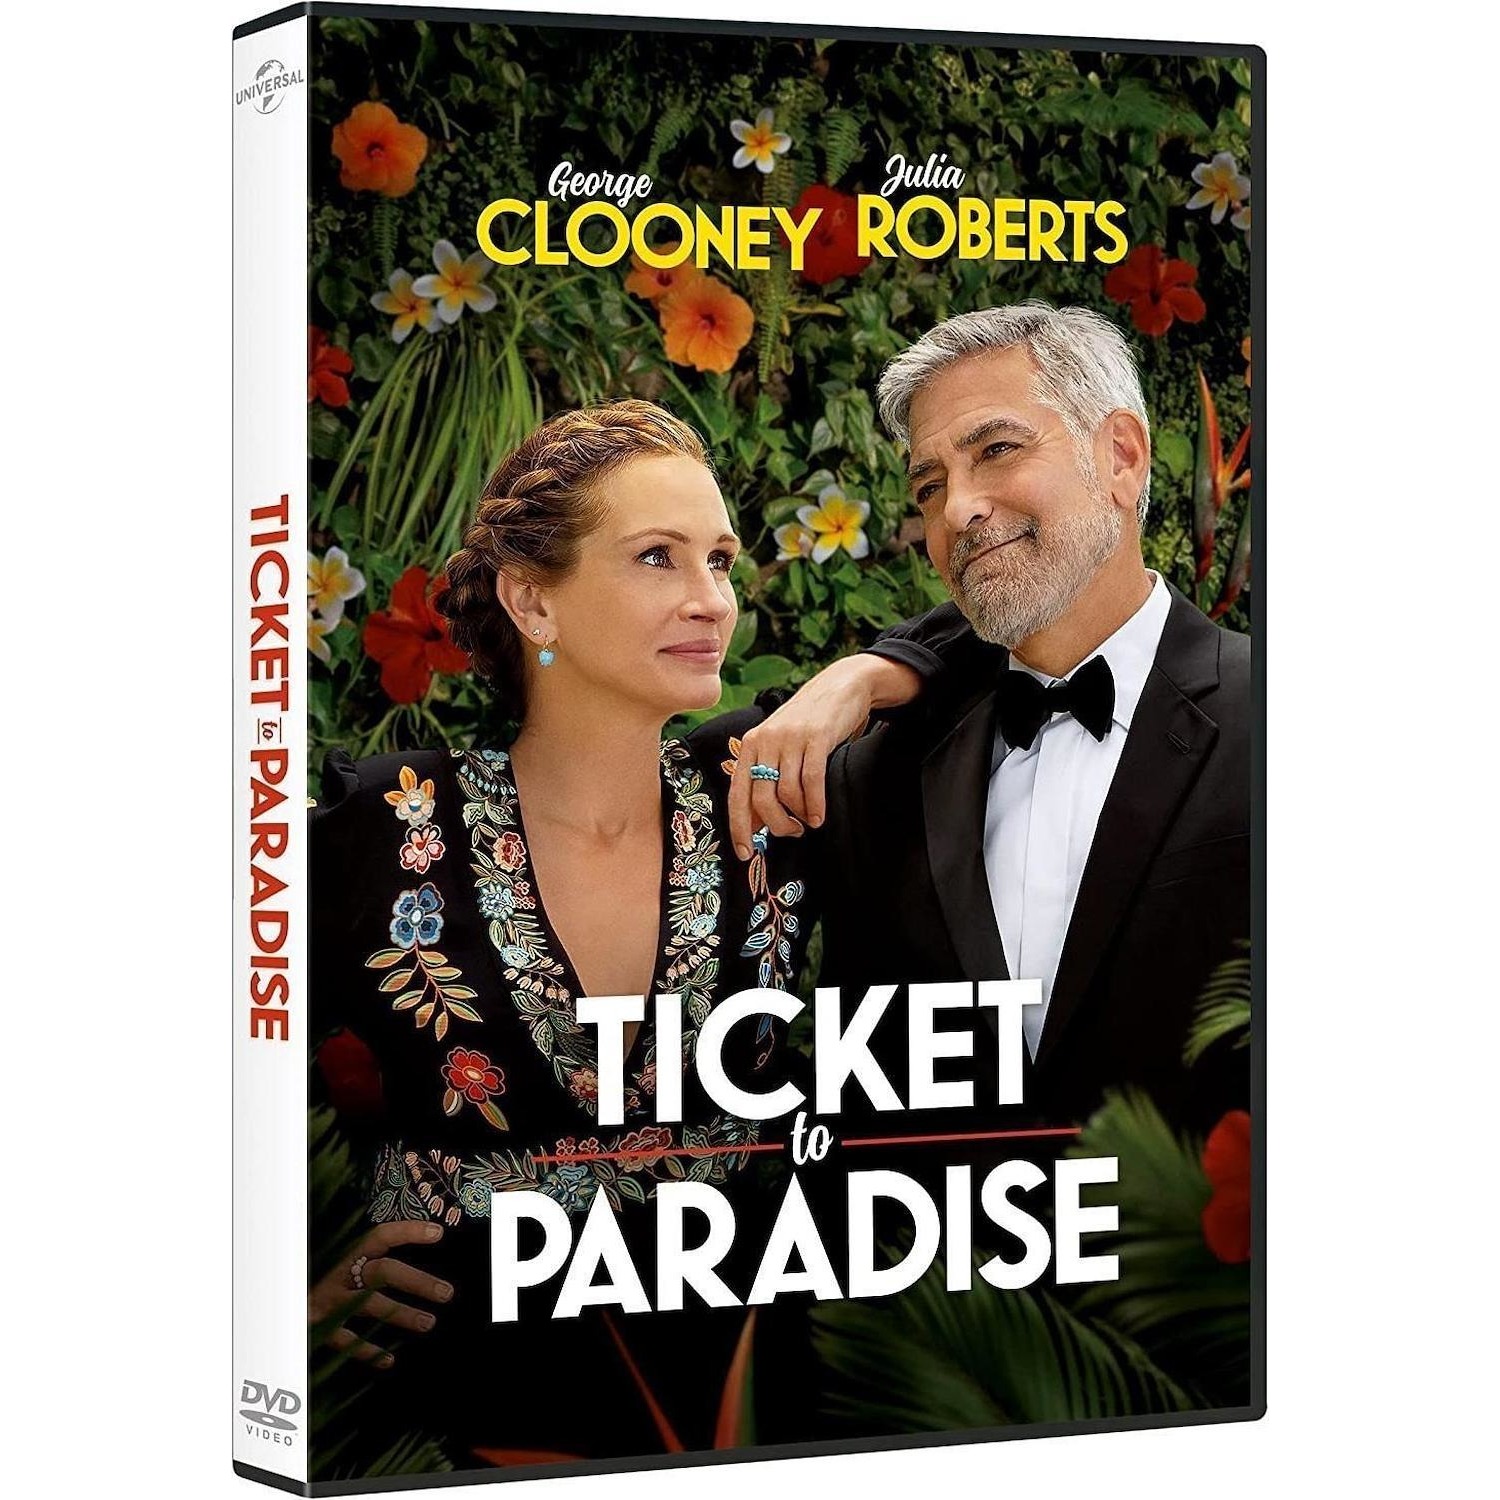 Immagine per DVD Ticjet to Paradise da DIMOStore